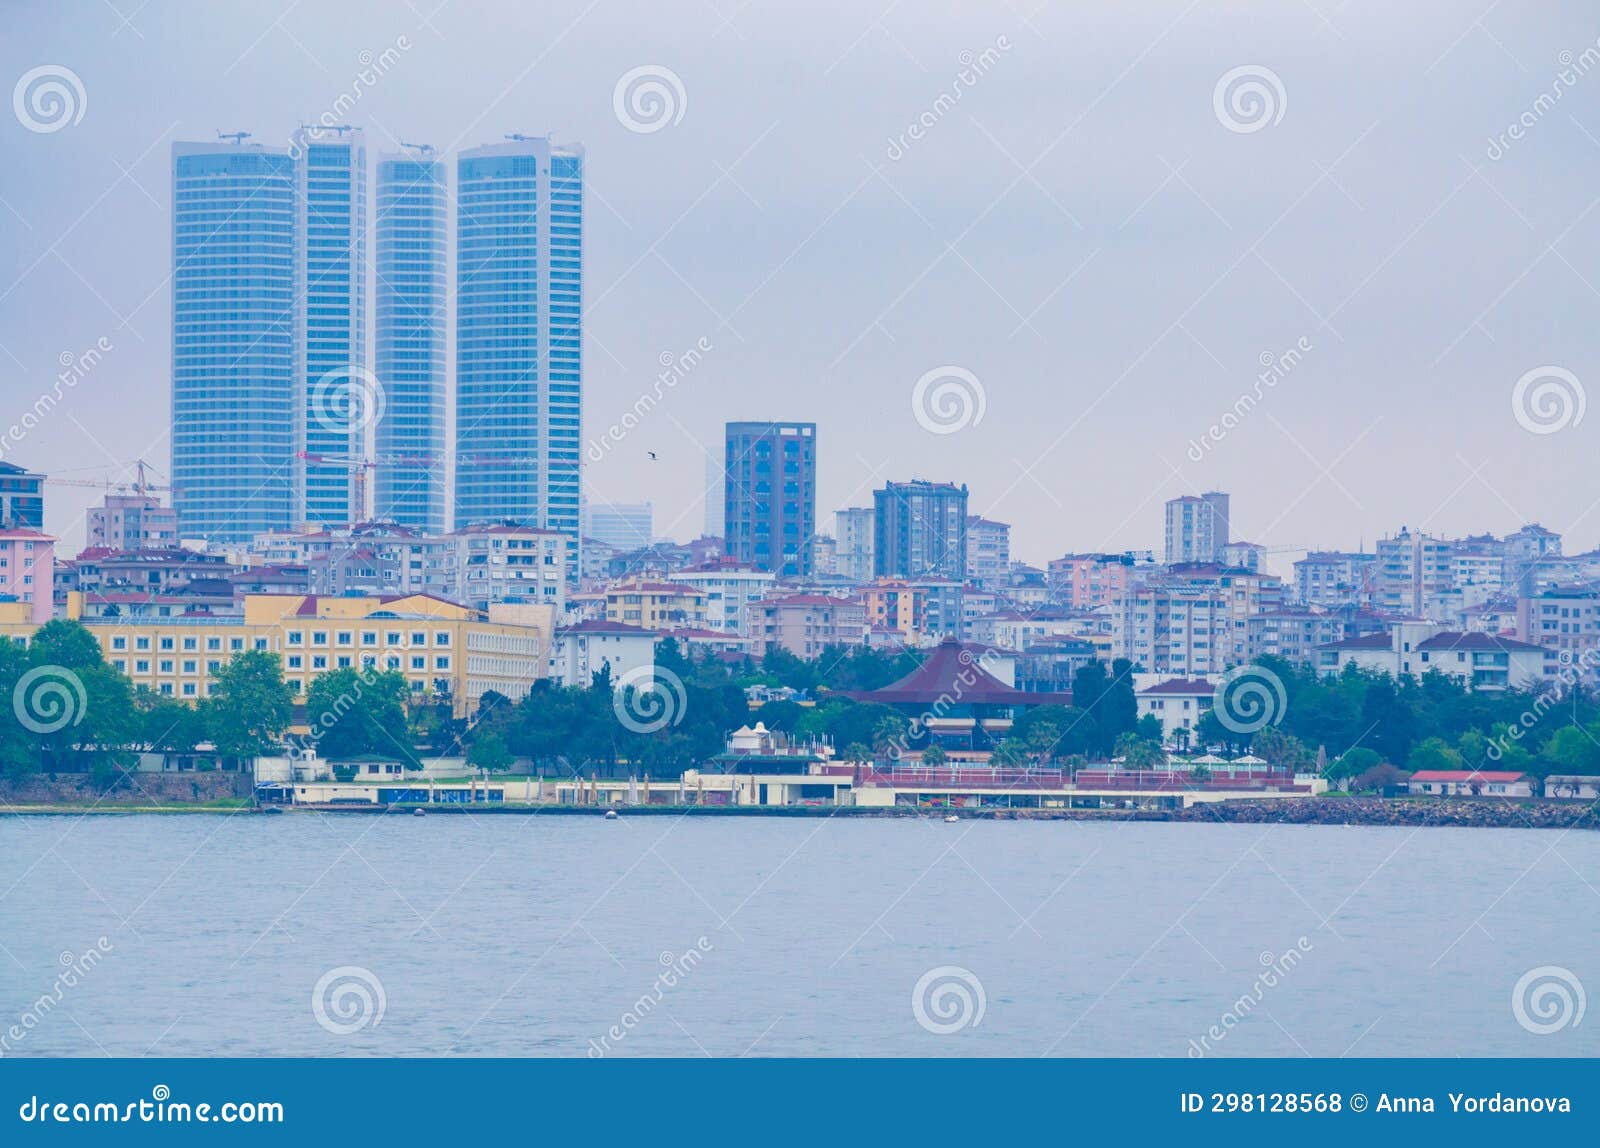 fenerbahce district anatolian side of istanbul city skyline turkey